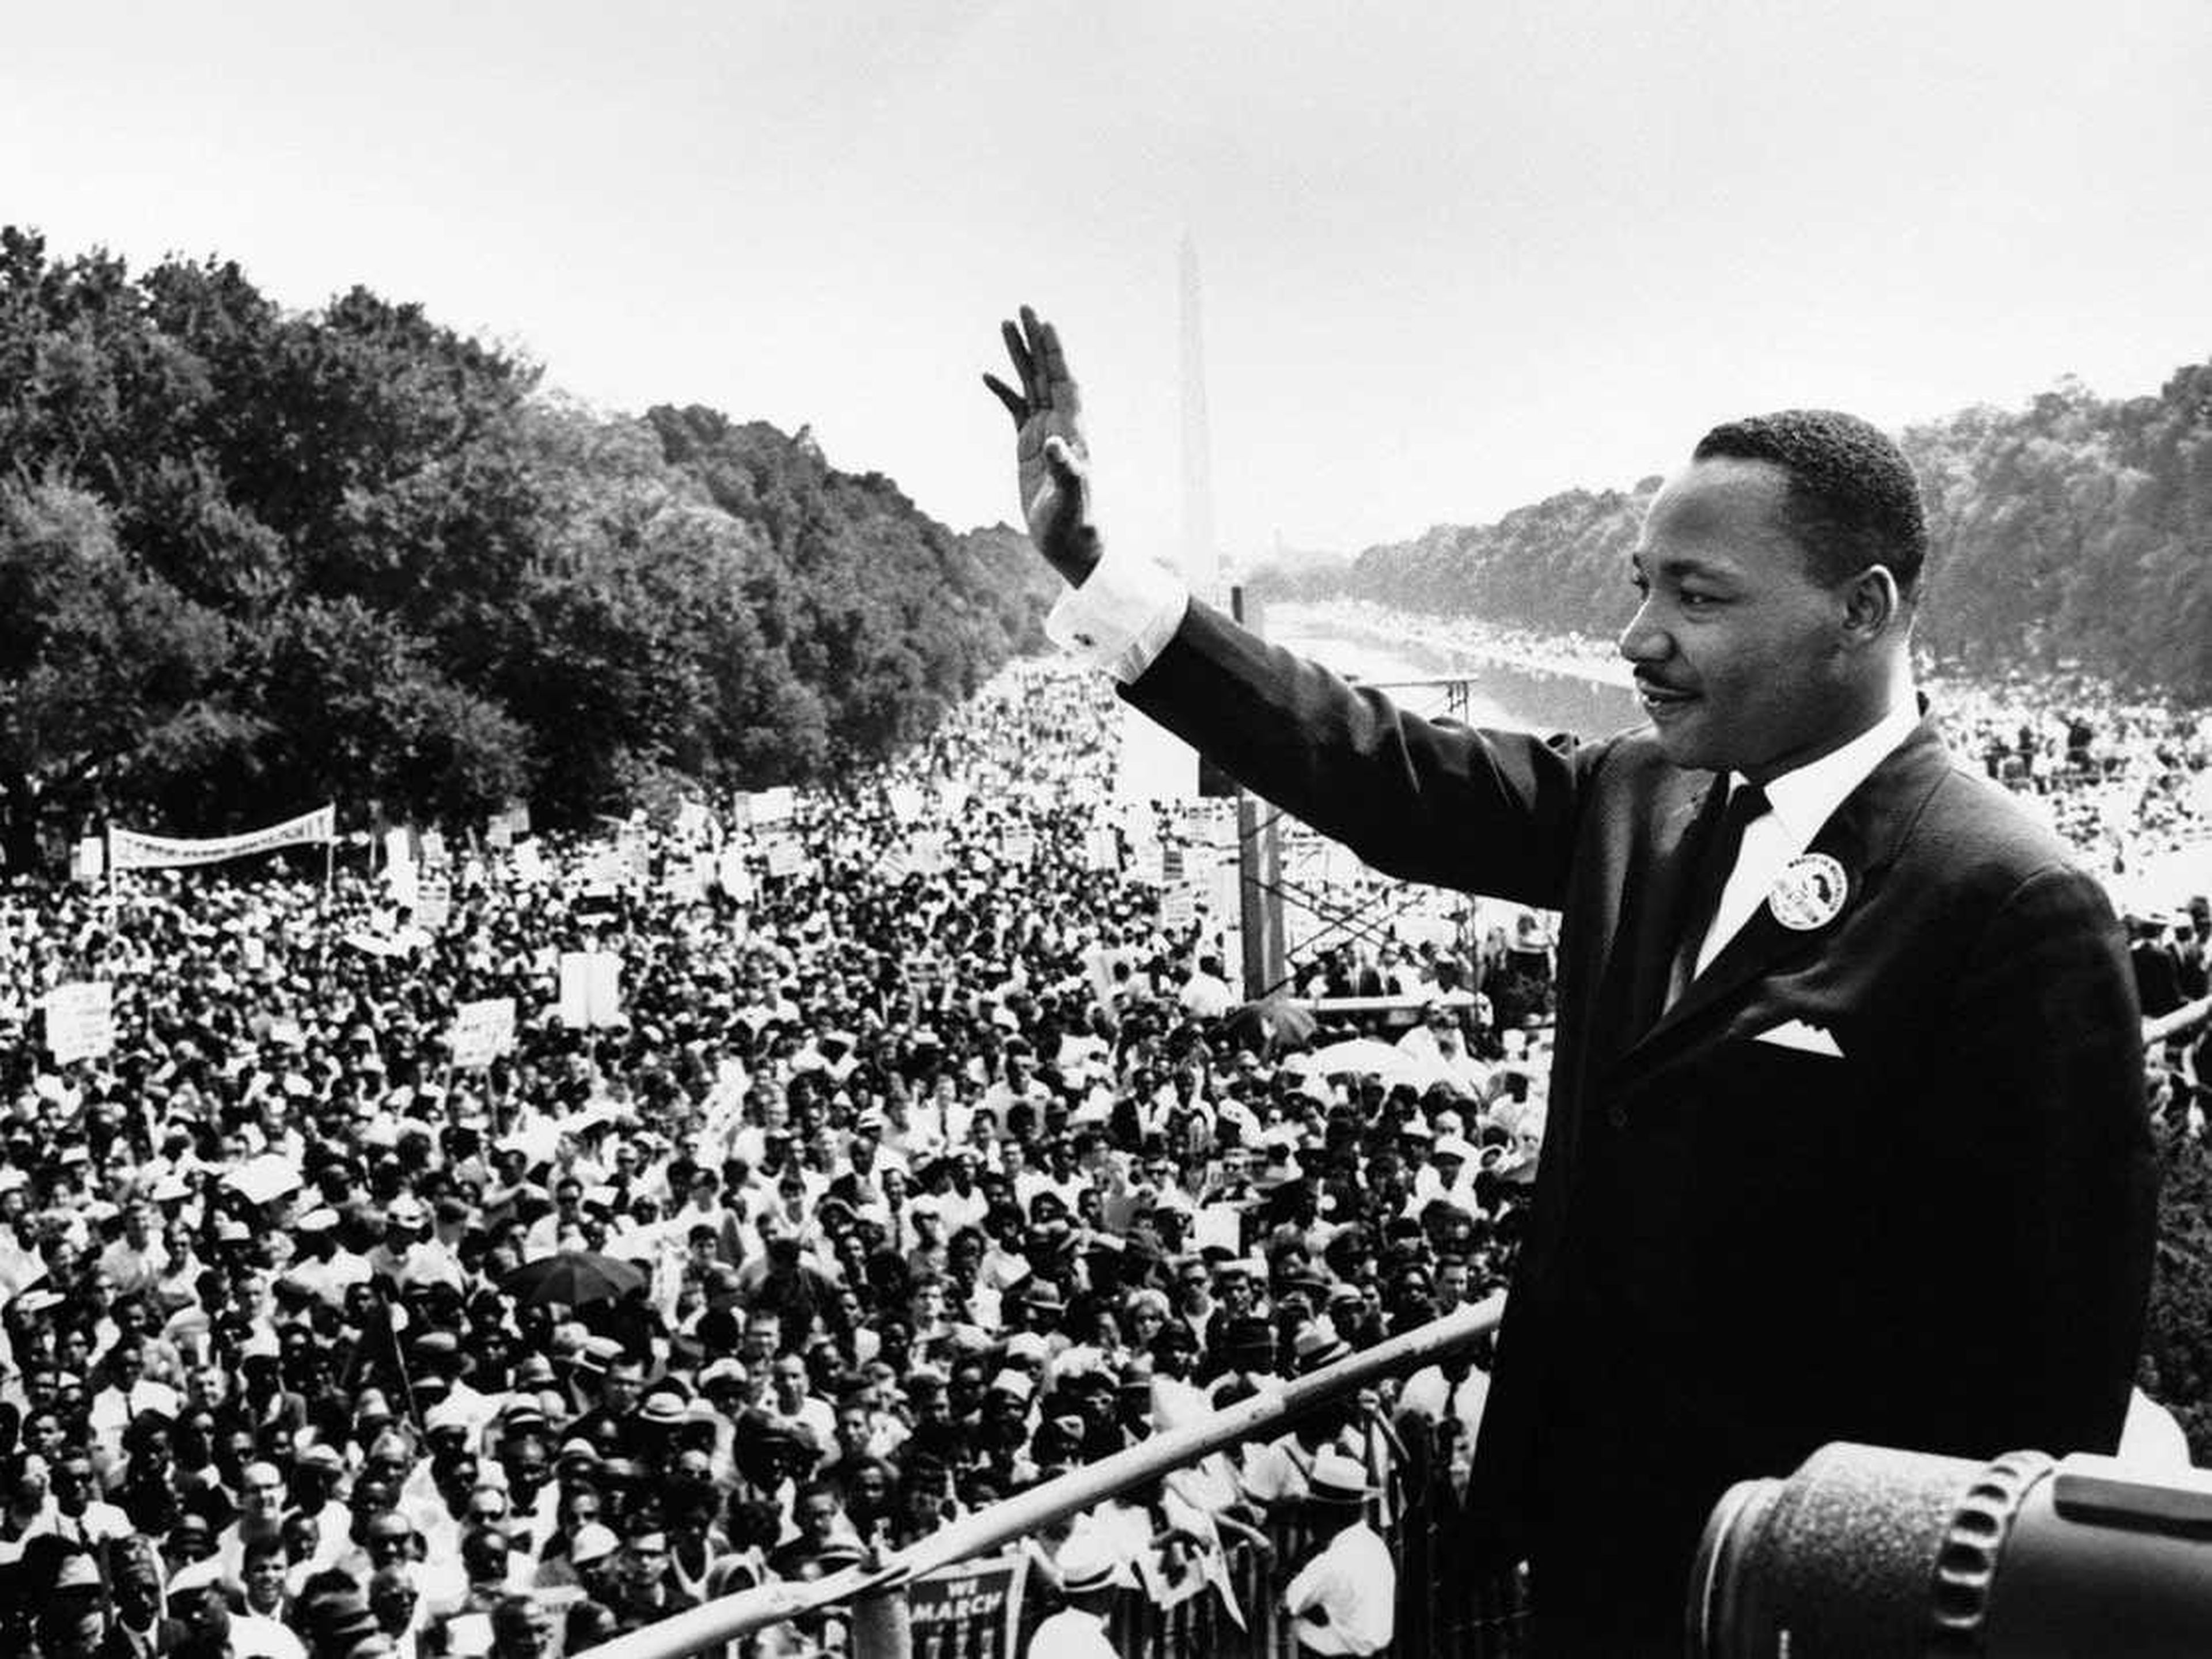 Para ser más carismático, mira los discursos de líderes como Martin Luther King, Jr.